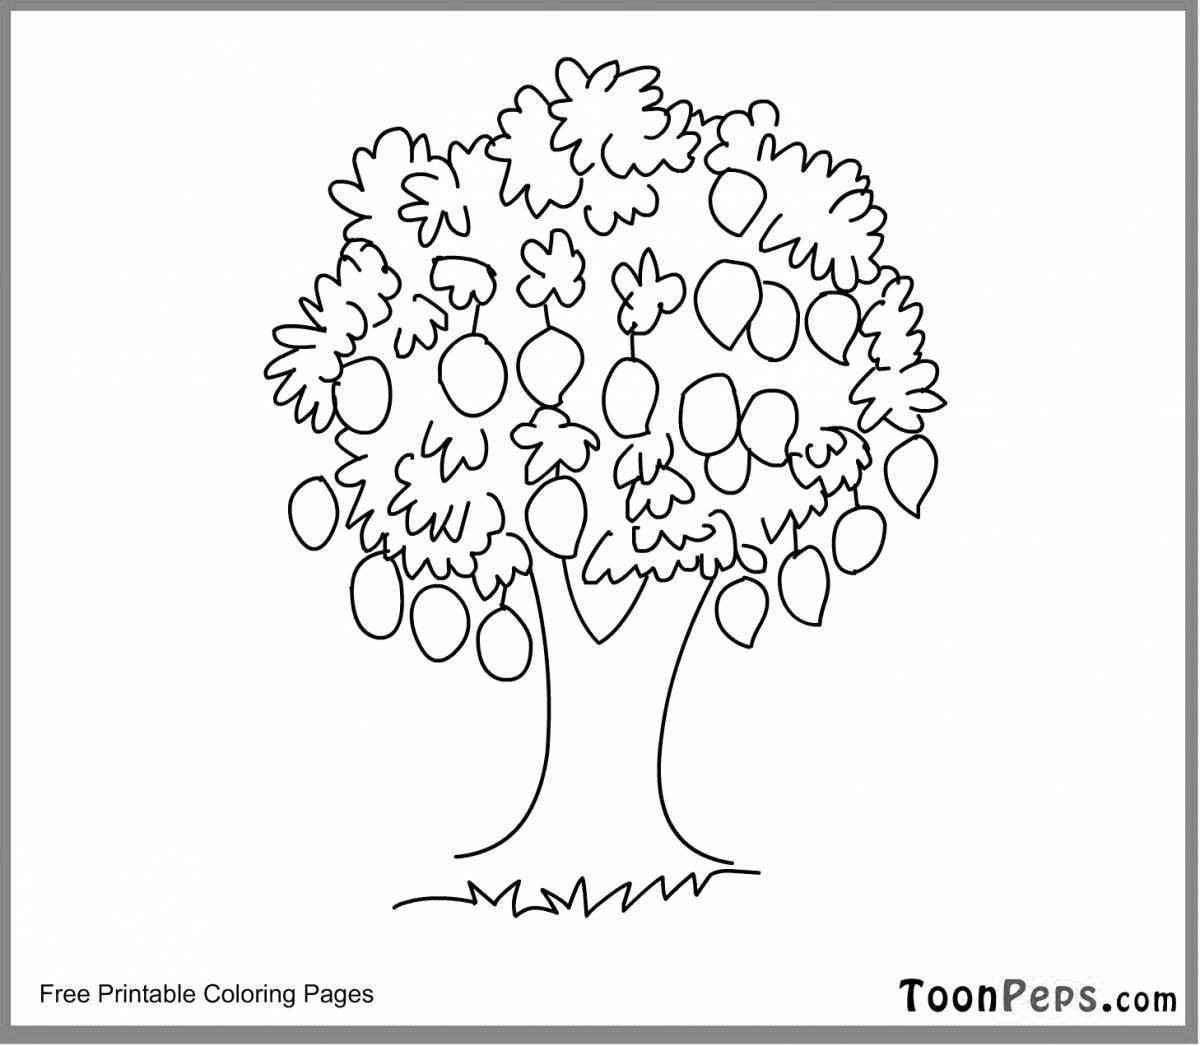 Bright family tree illustration